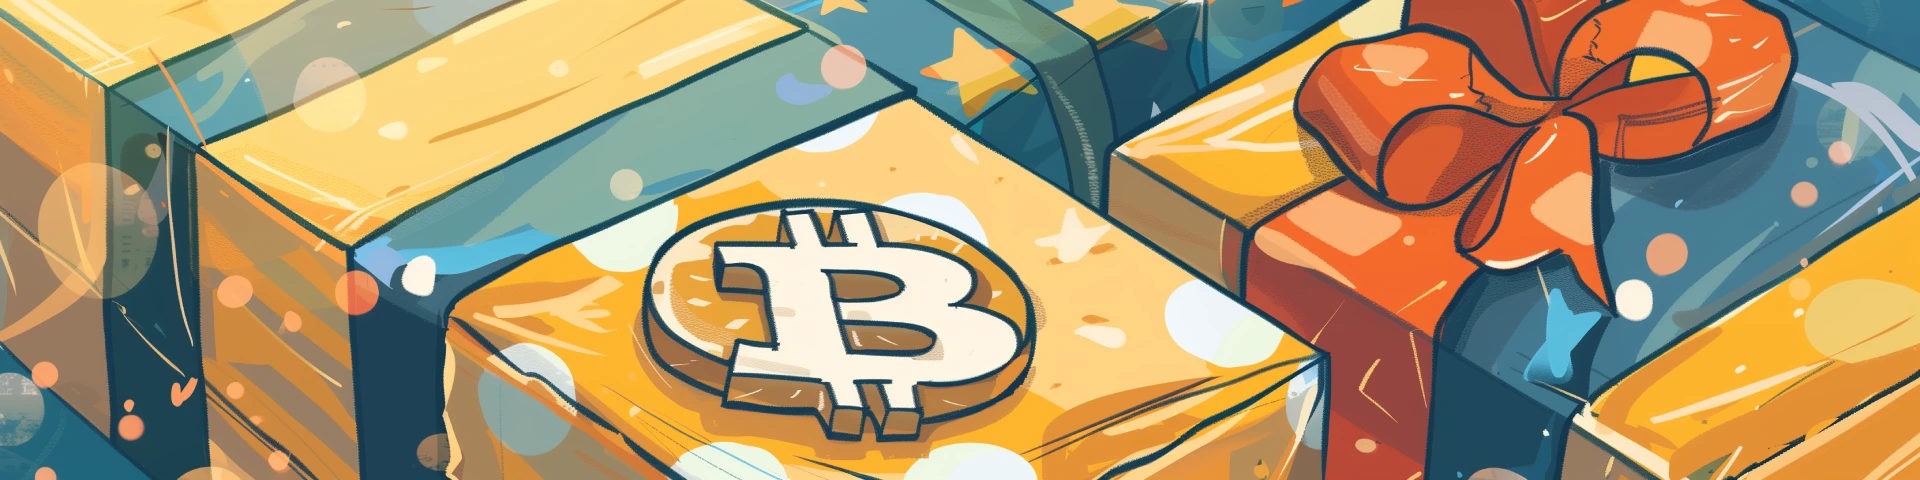 Gift with Bitcoin logo cartoon banner